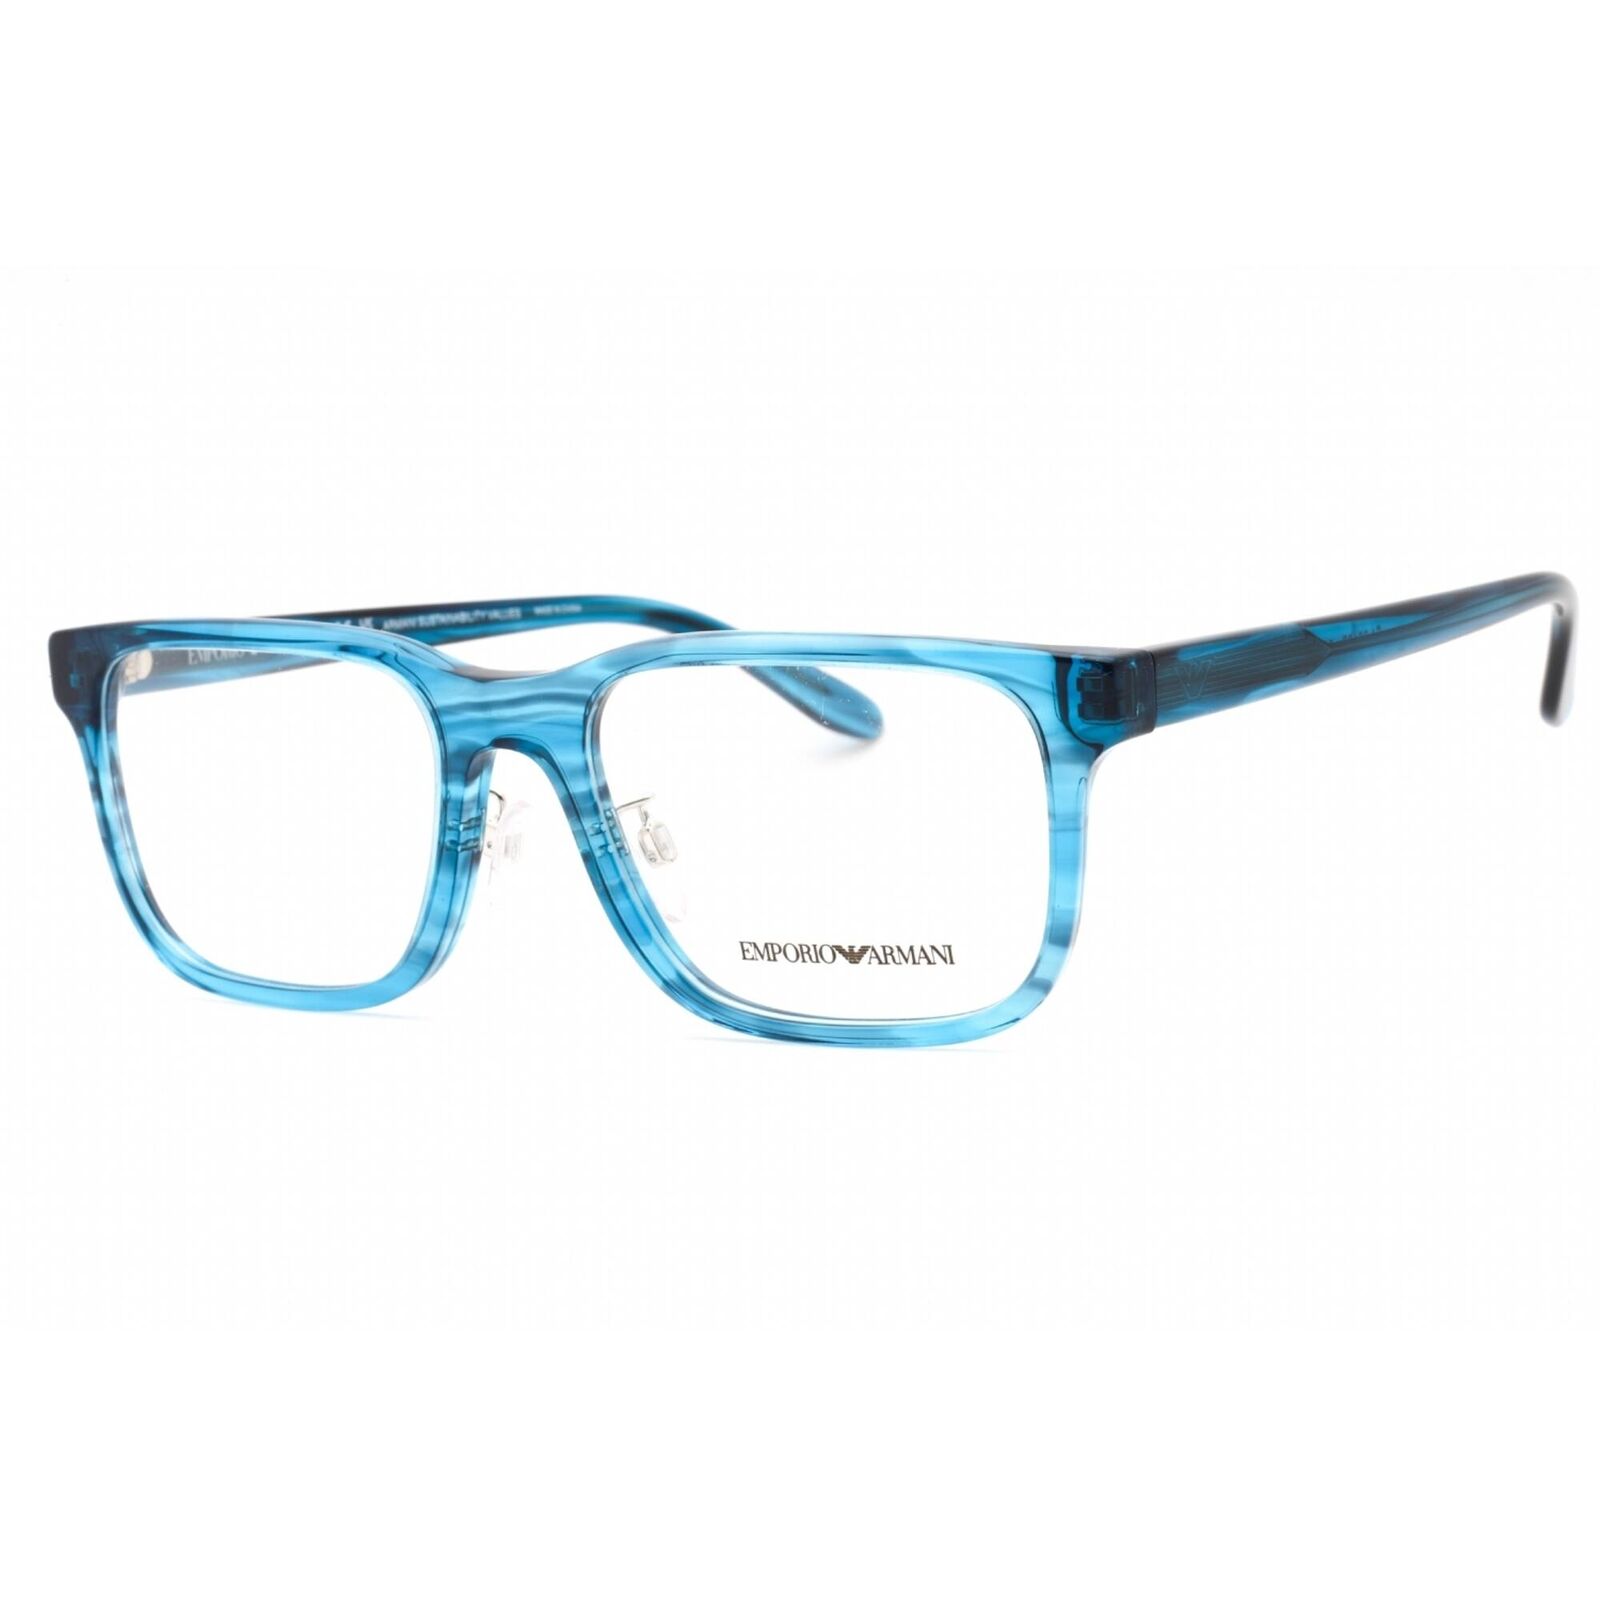 Emporio Armani Women's Eyeglasses Striped Blue Full Rim Frame 0EA3218F 5311 Emporio Armani 0EA3218F 5311